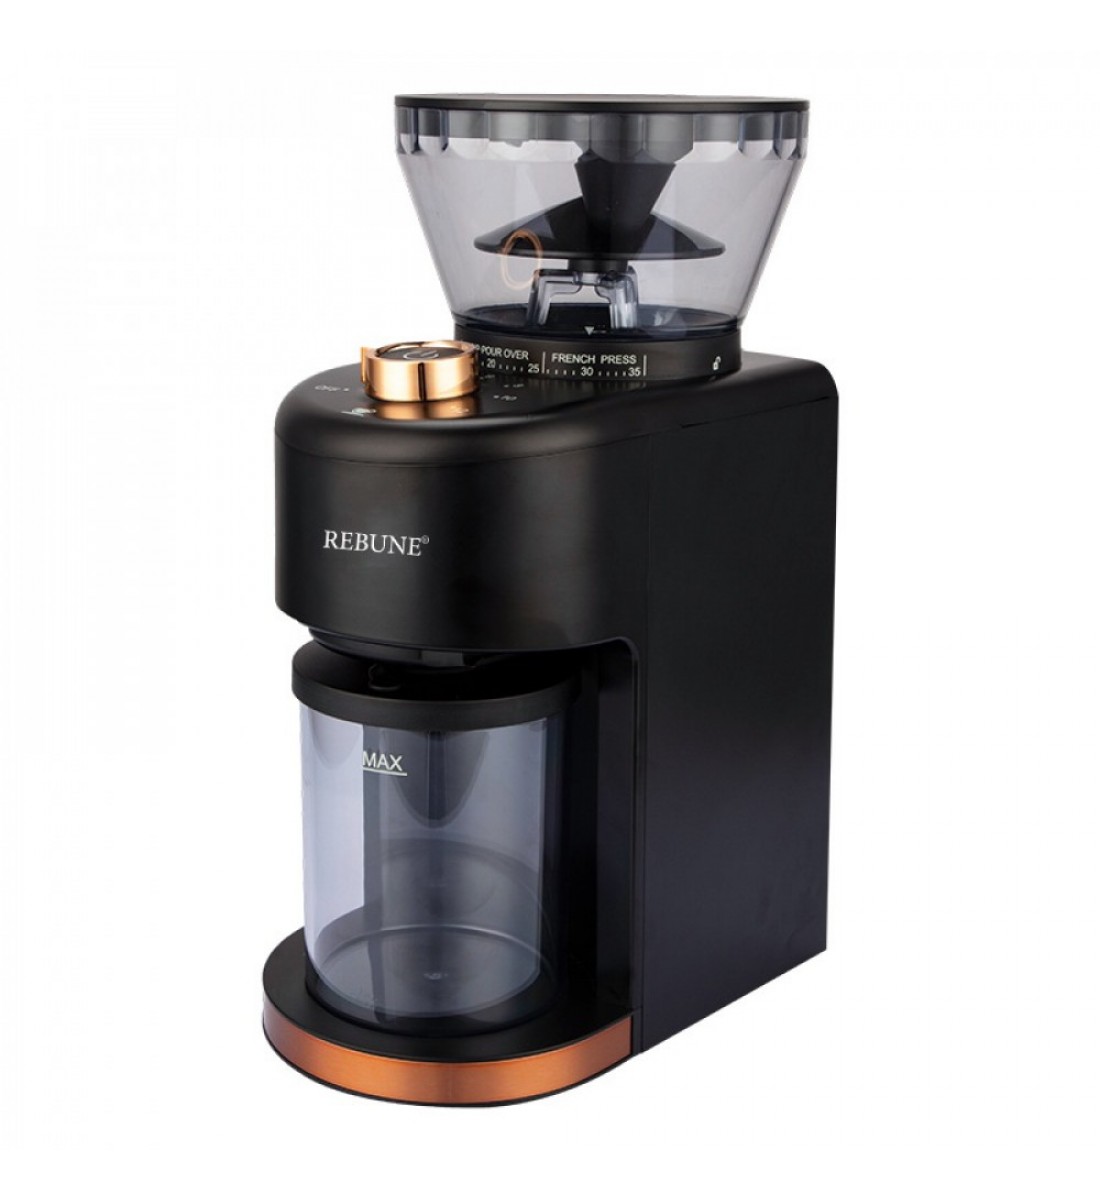 Nebras coffee grinder